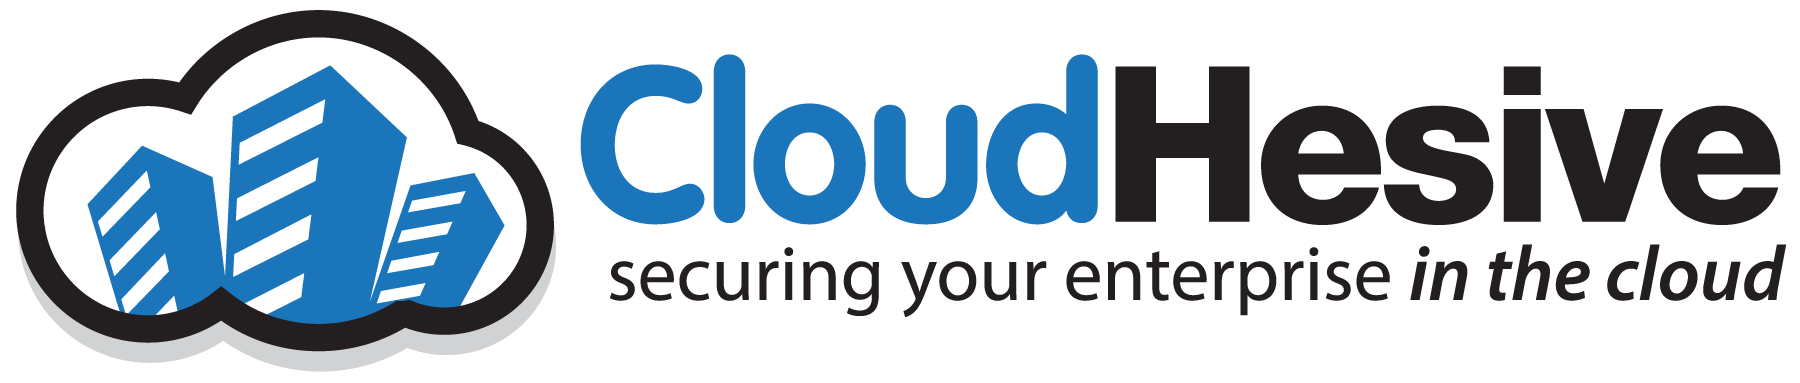 GL-Logo-Sponsor-CloudHesive.PNG